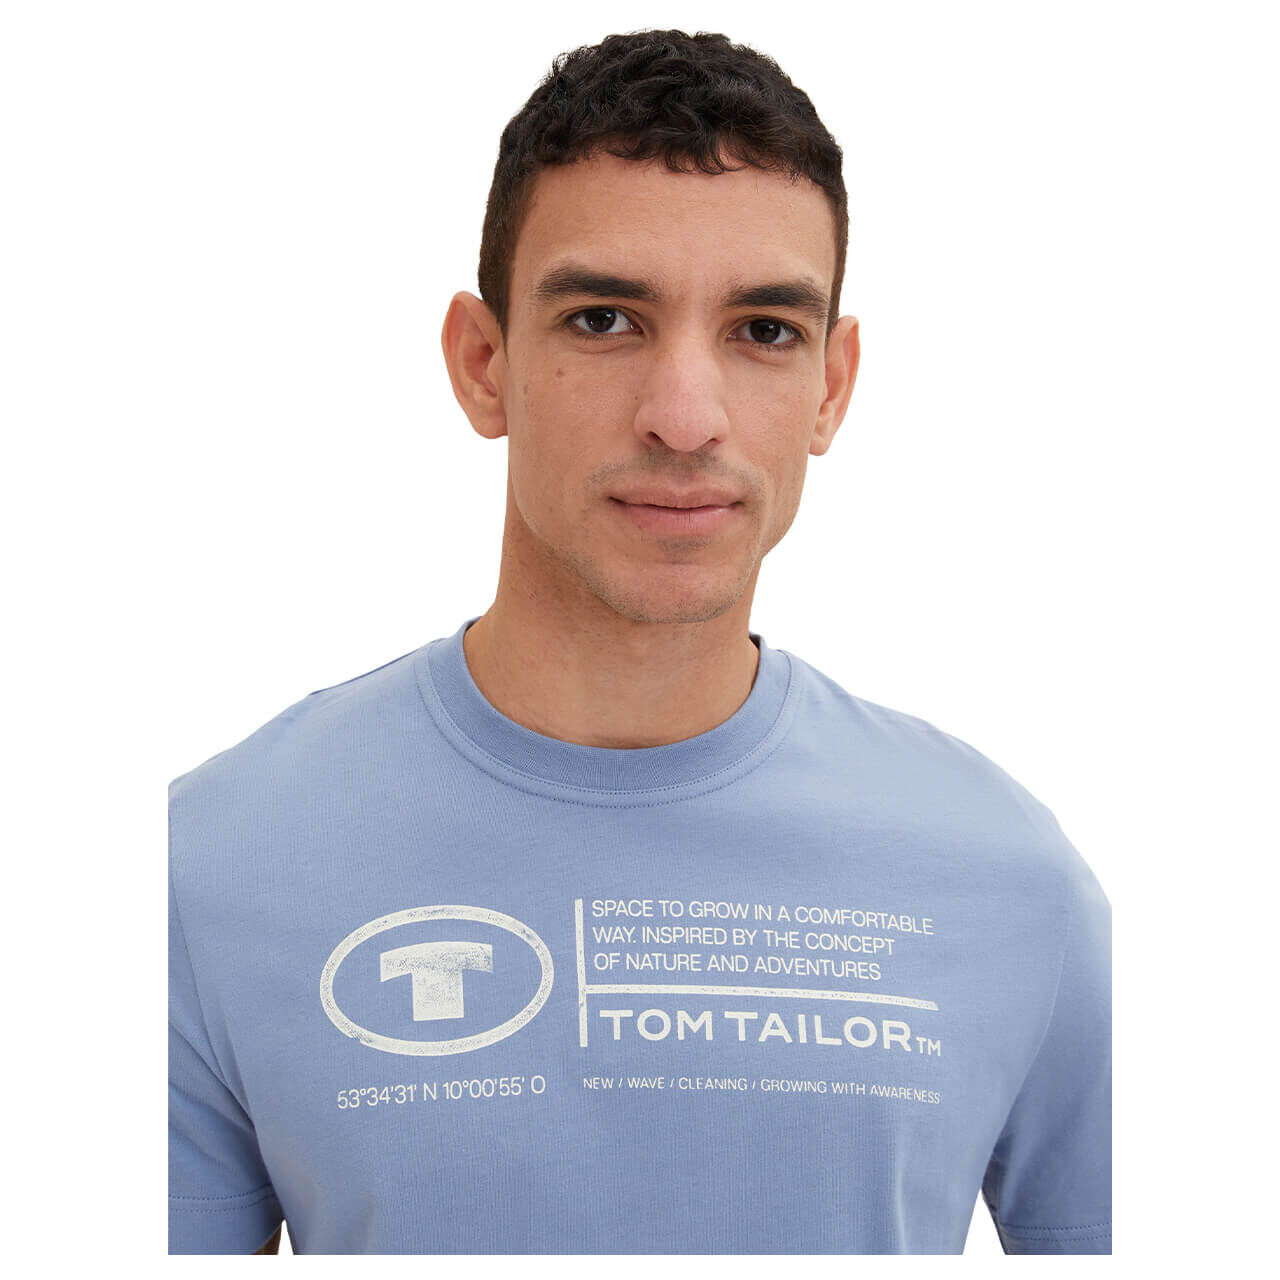 Tom Tailor Herren T-Shirt greyish mid blue logo wording